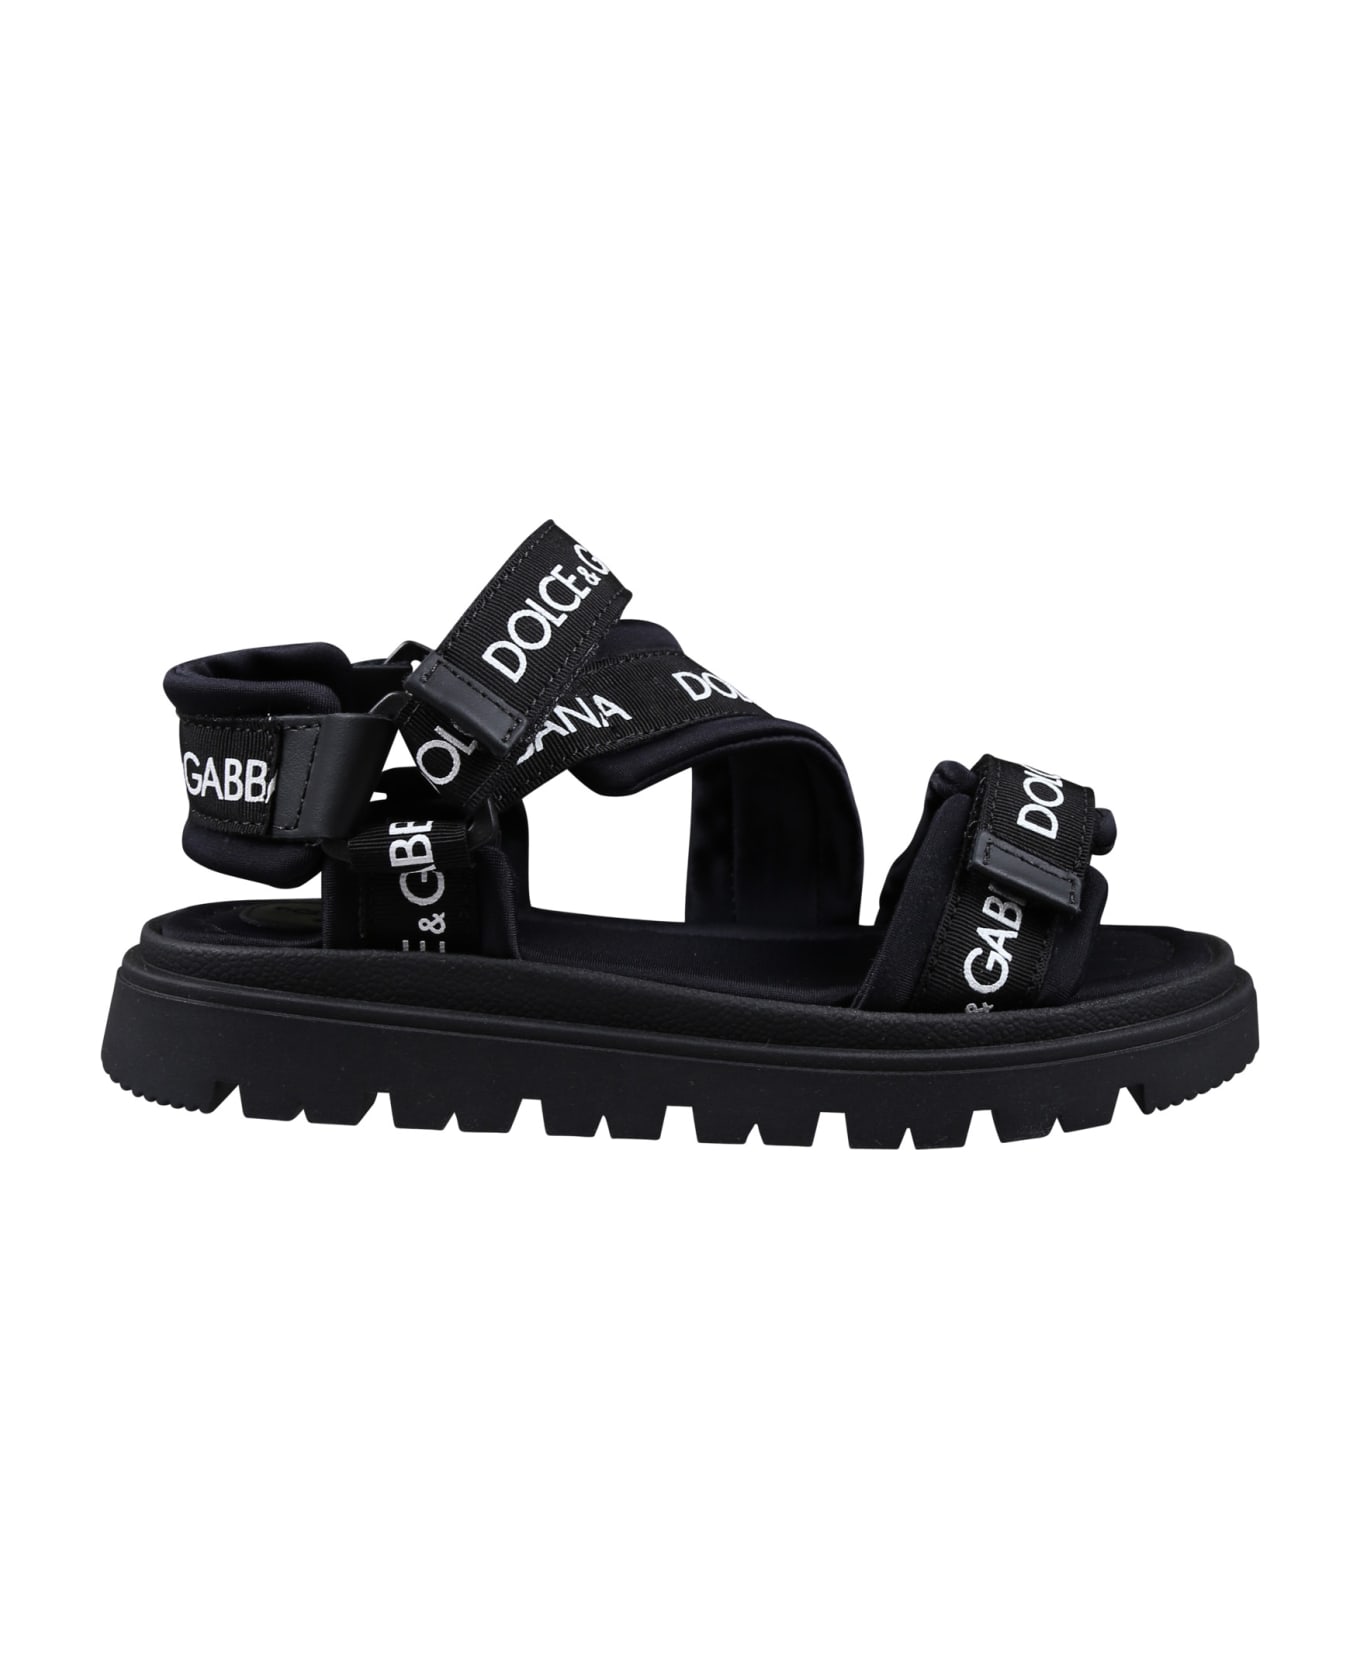 Dolce & Gabbana Black Sandals For Kids With Logo - Black シューズ